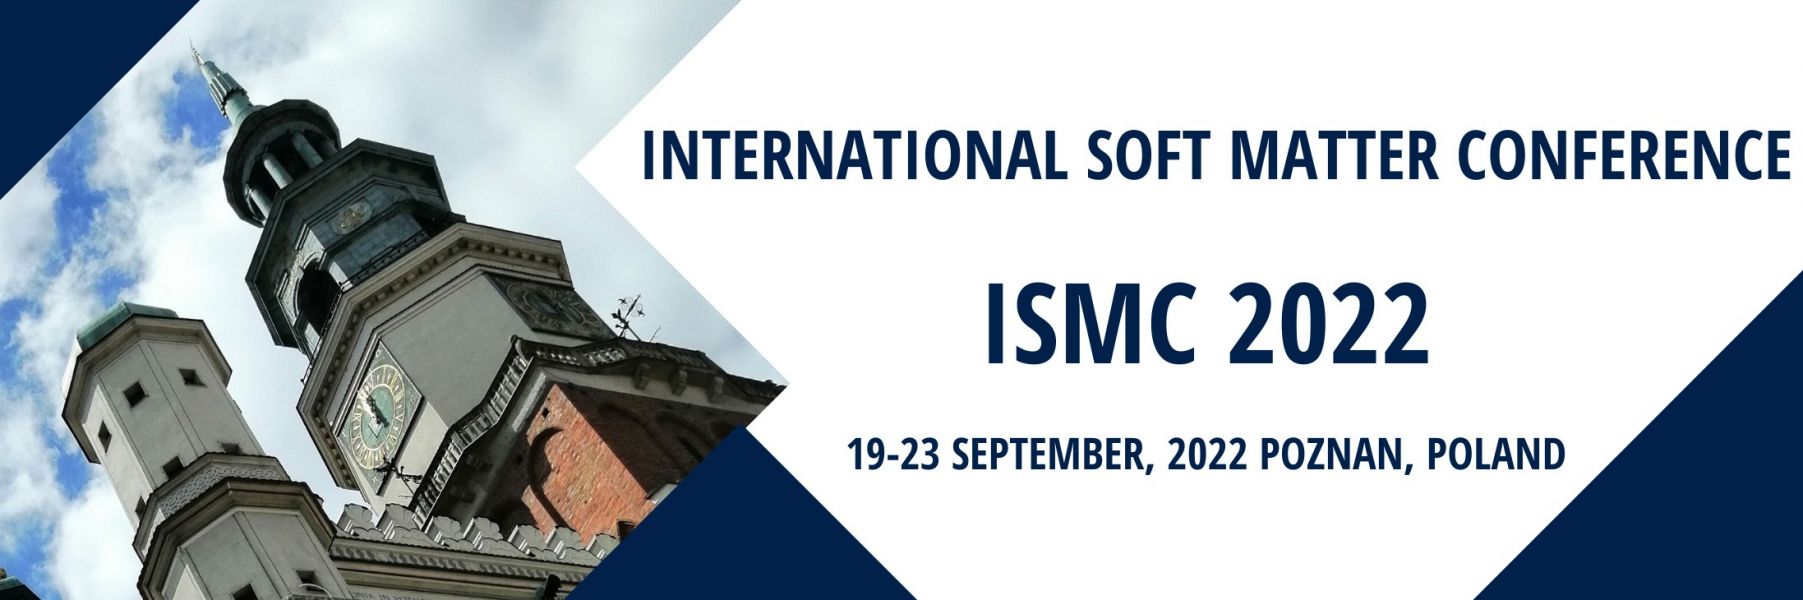 International Soft Matter Conference ISMC 2022, Poznań Szkoła Nauk